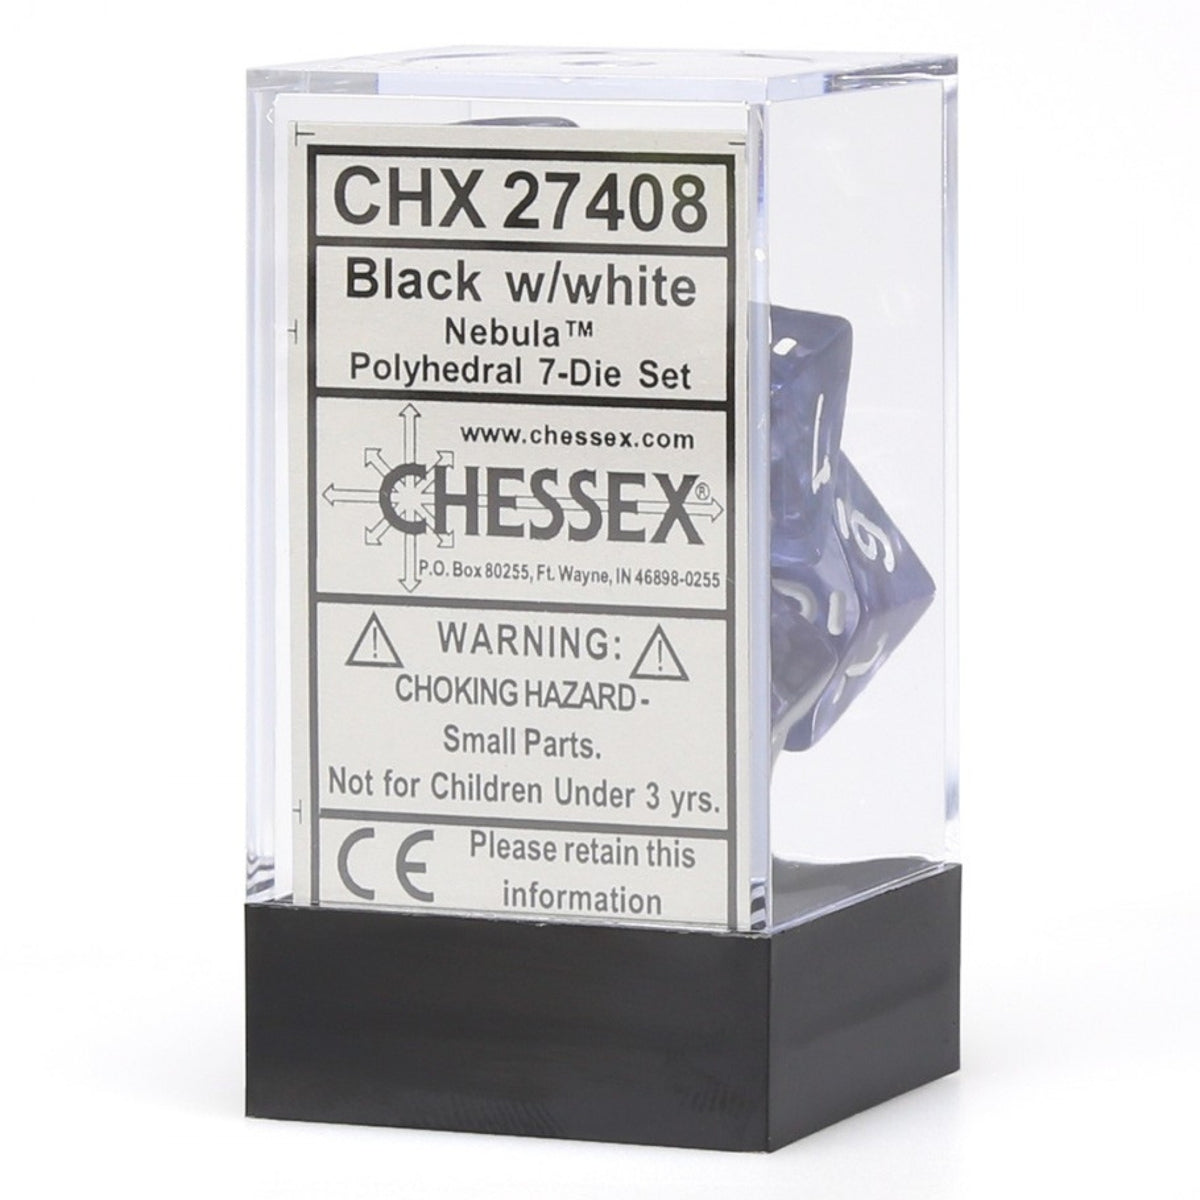 Chessex - Nebula Polyhedral 7-Die Set - Black/White (CHX27408)